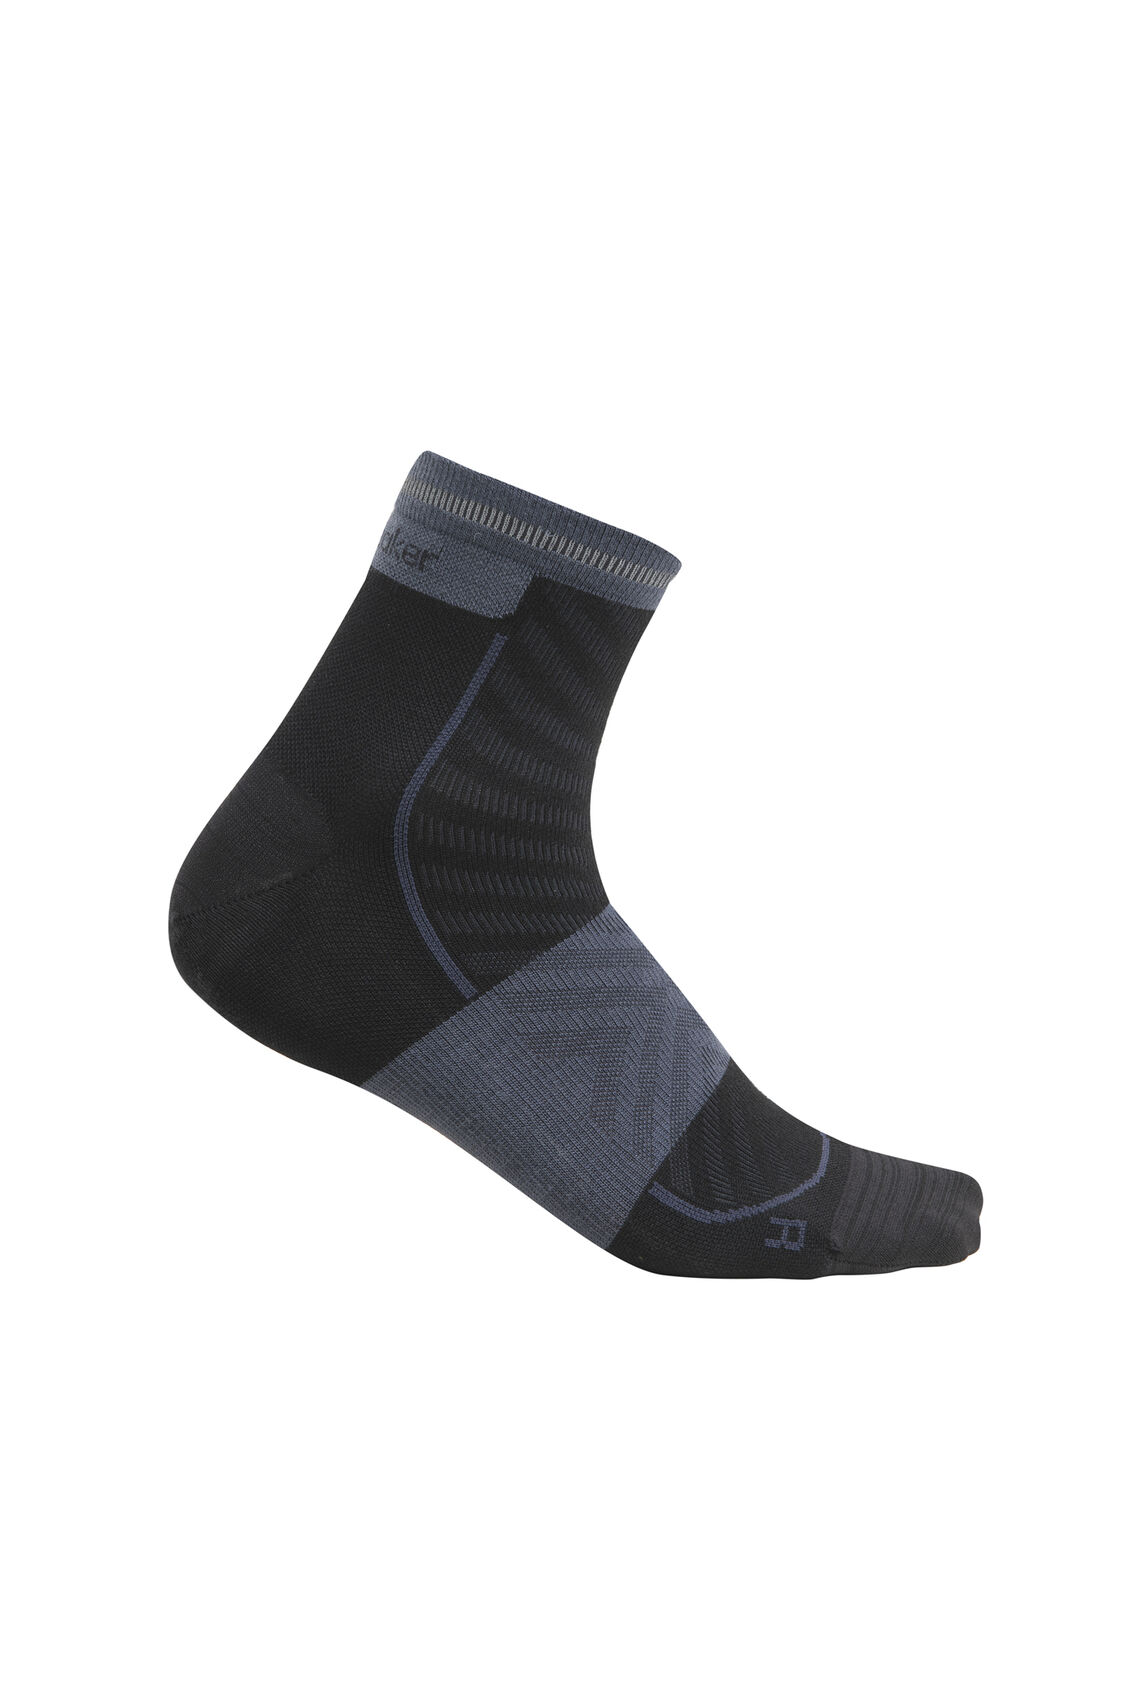 Icebreaker Merino Blend Run+ Ultralight Mini Socks (Men's) - Black/Graphite - Find Your Feet Australia Hobart Launceston Tasmania